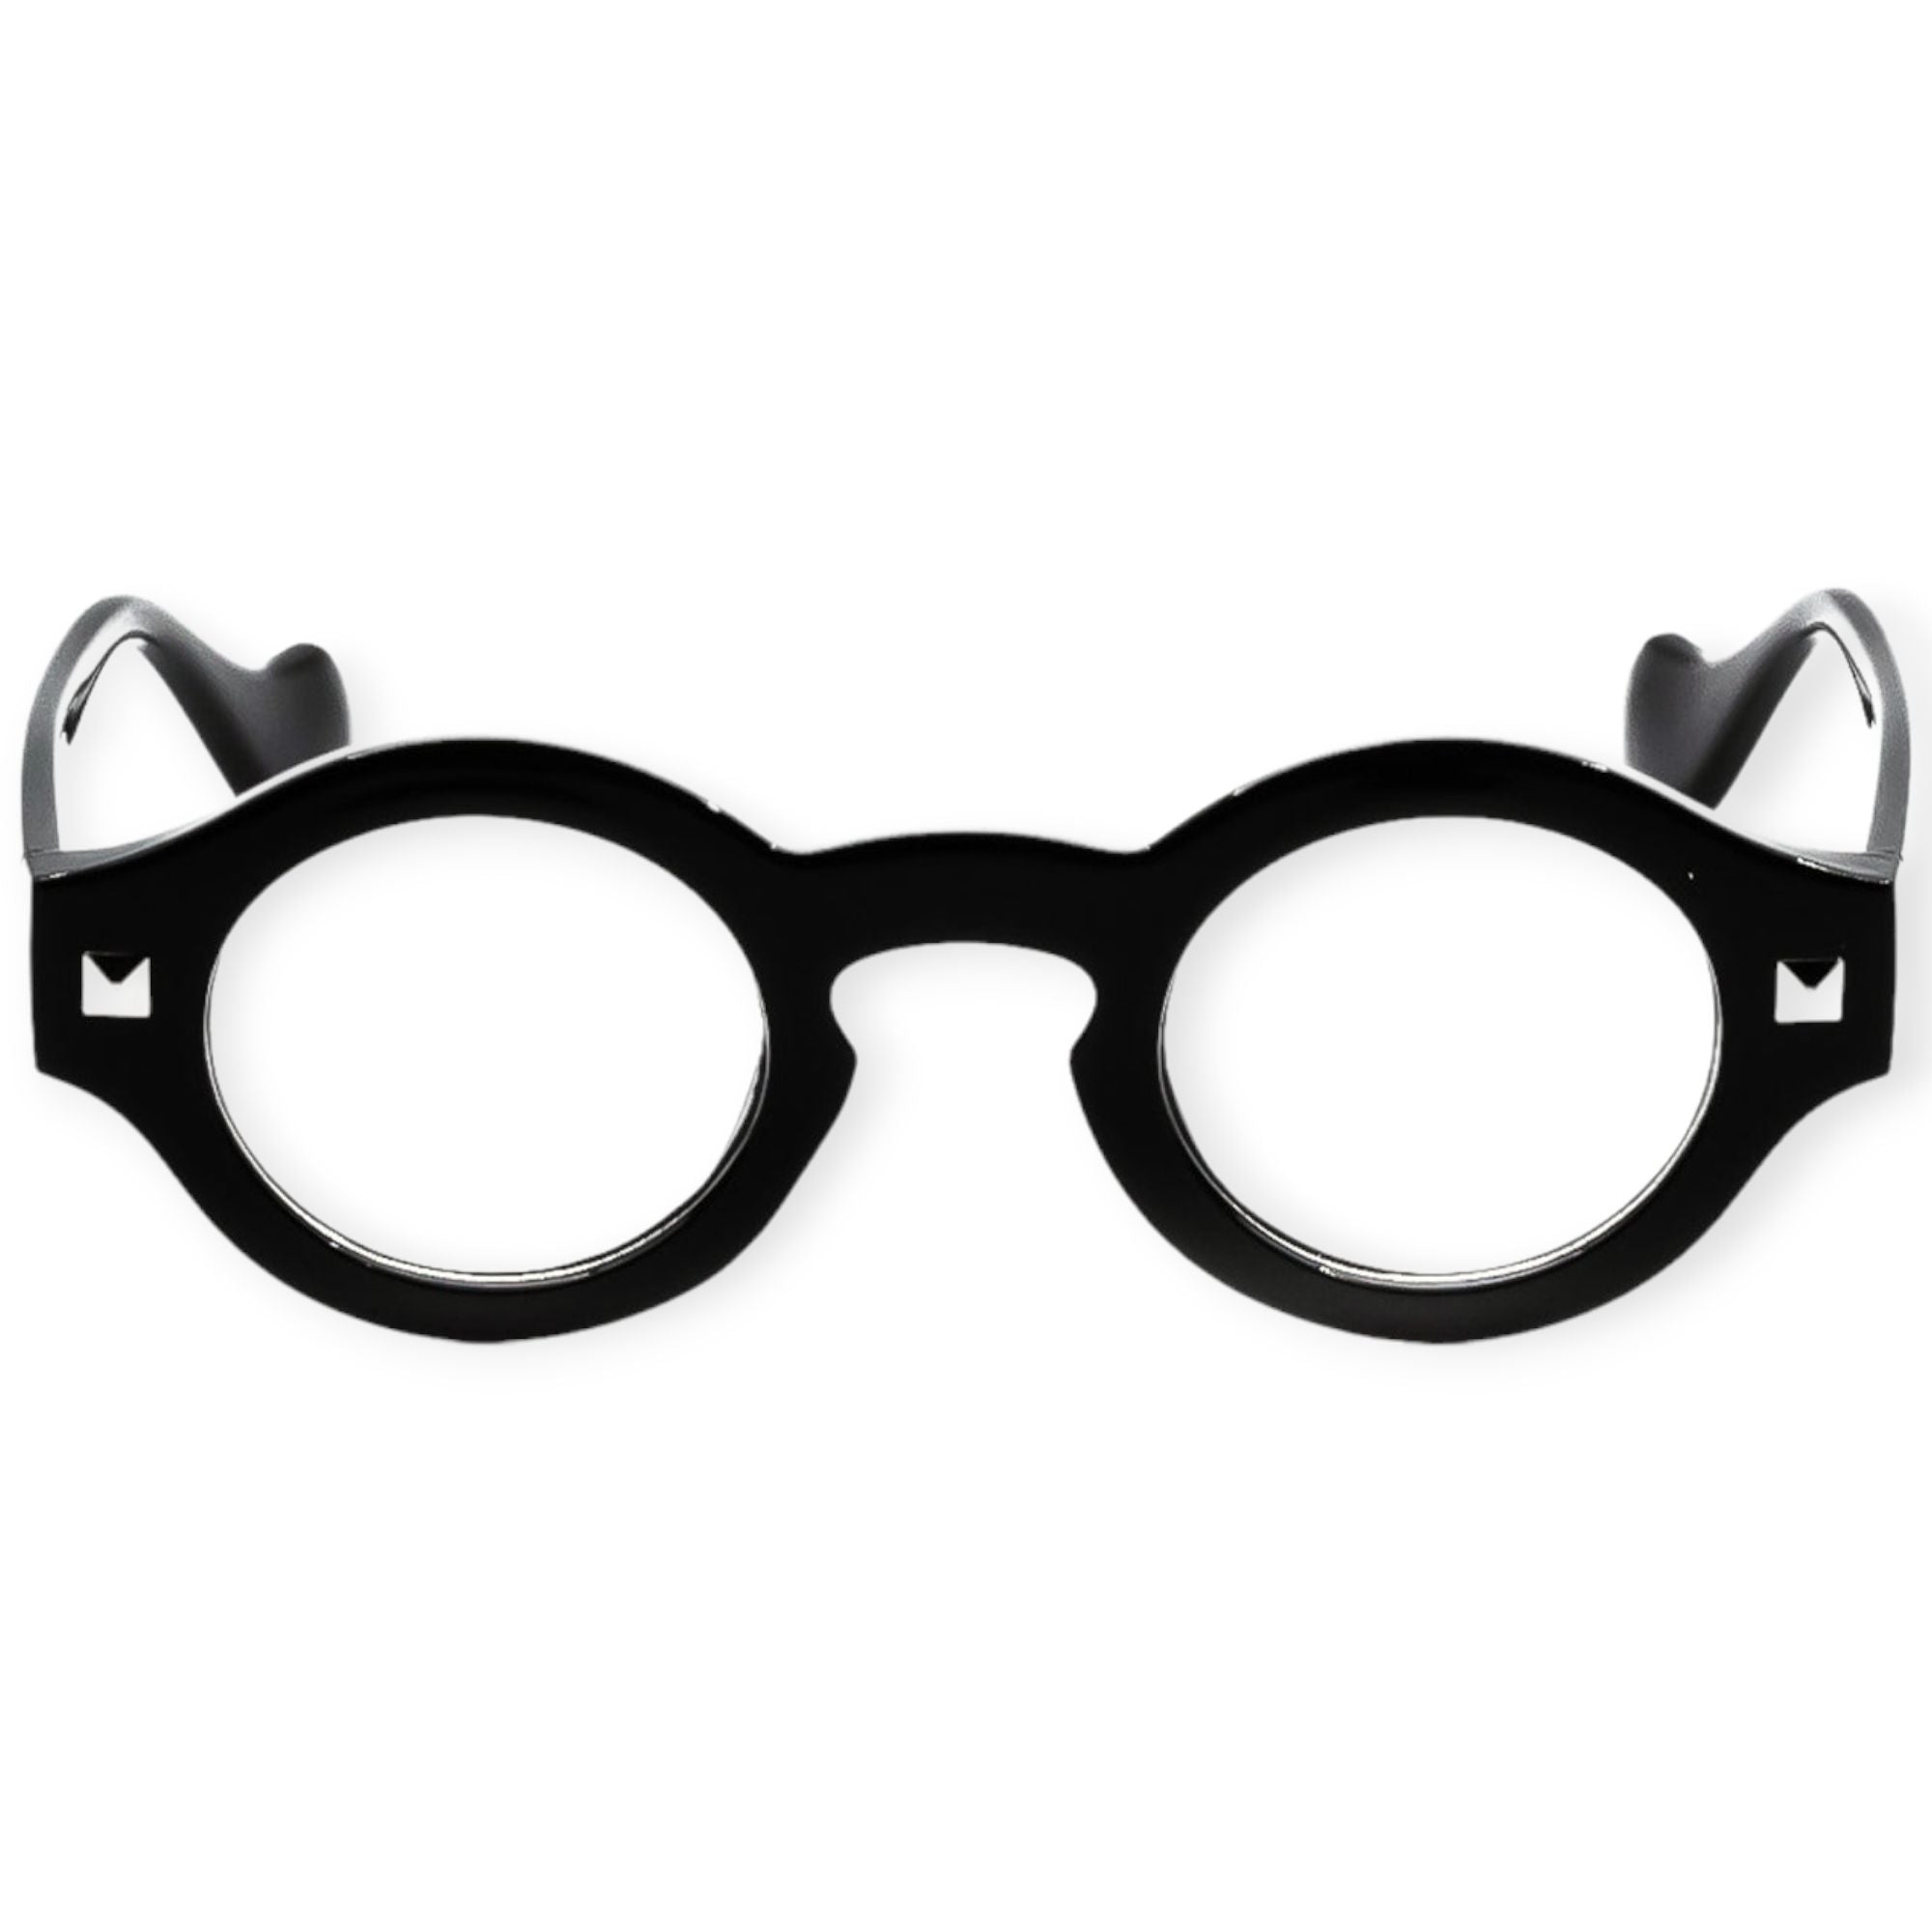 Trendy Jendy Men San Bernardo Glasses (Black)-Black-OneSize-Nexus Clothing